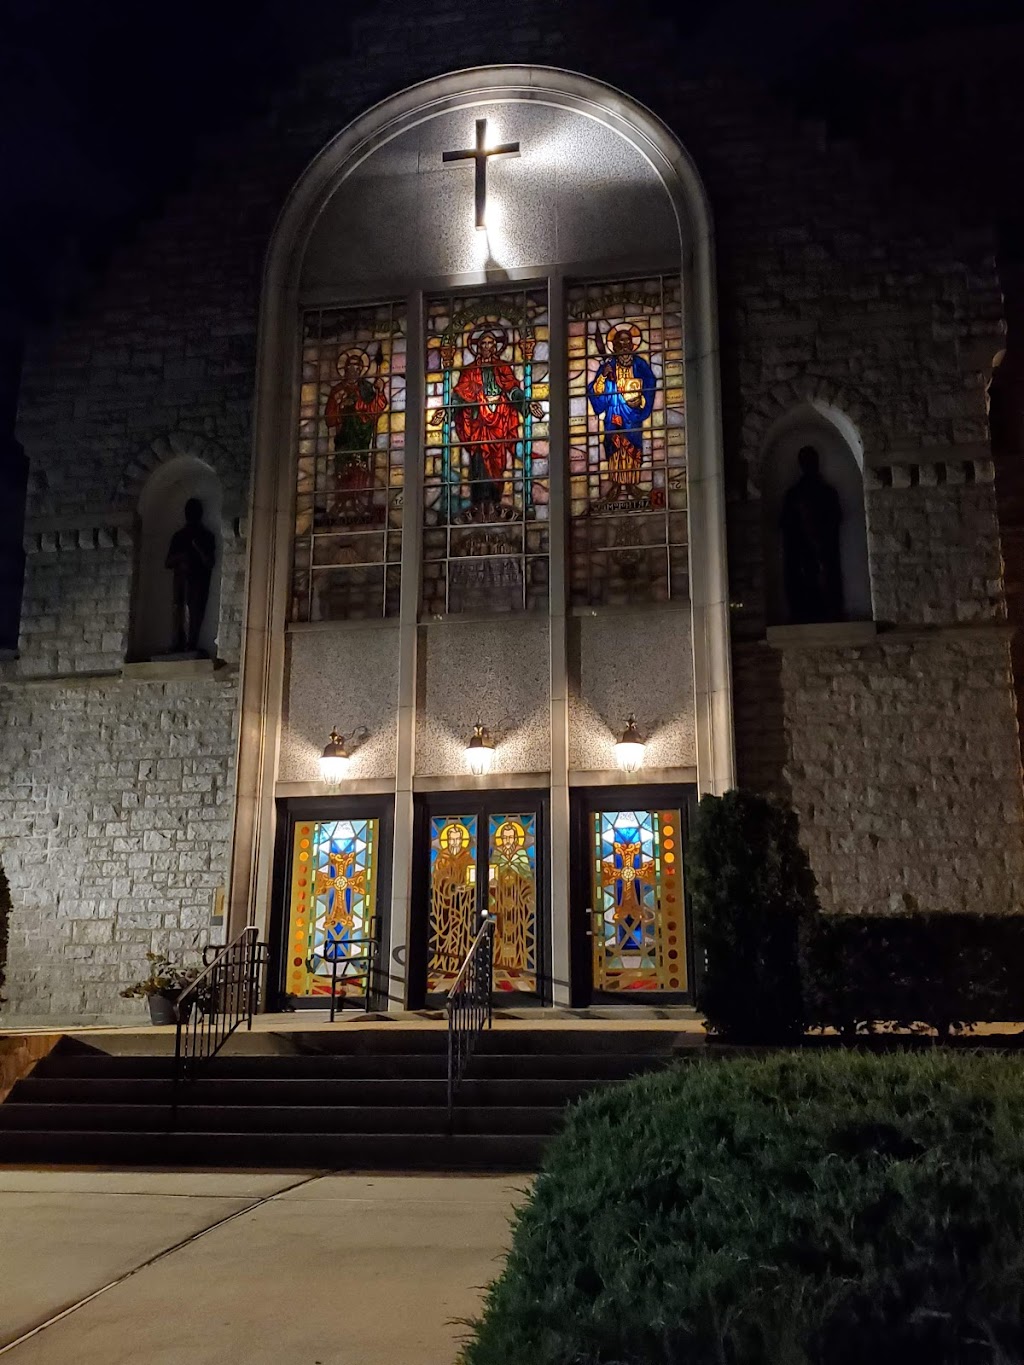 St. Sahag & St. Mesrob Armenian Apostolic Church | 630 Clothier Rd, Wynnewood, PA 19096 | Phone: (610) 642-4212